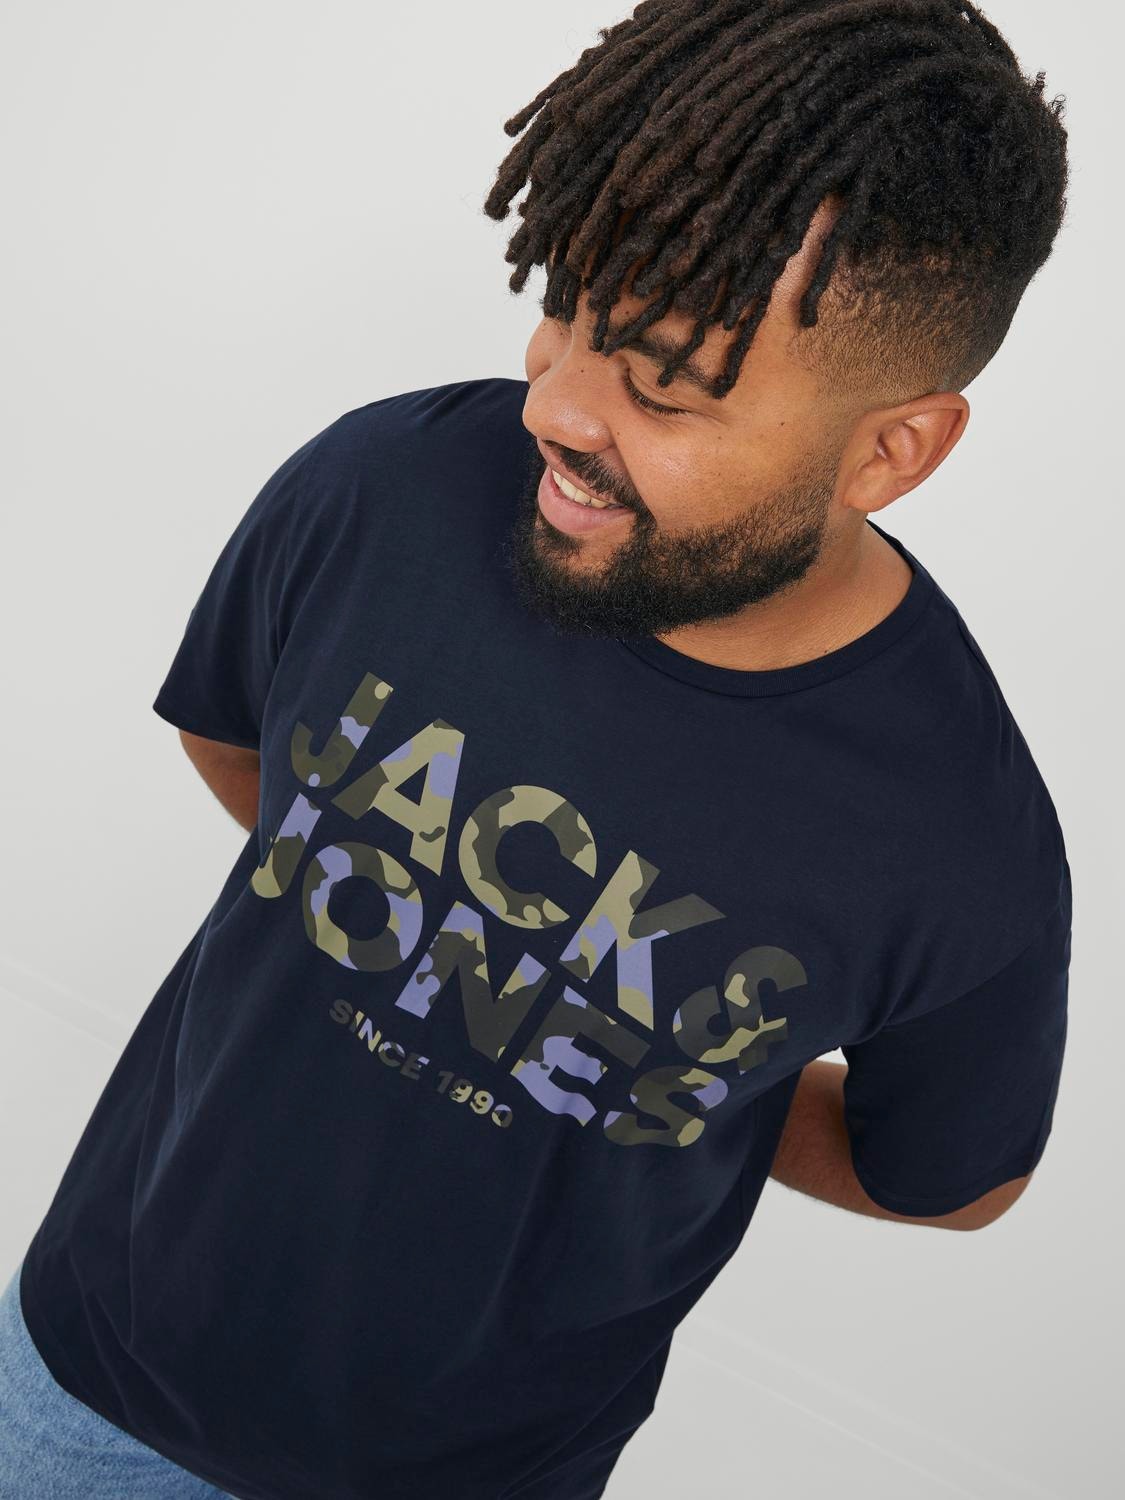 Plus Size Logo T-shirt | | Jack Jones®